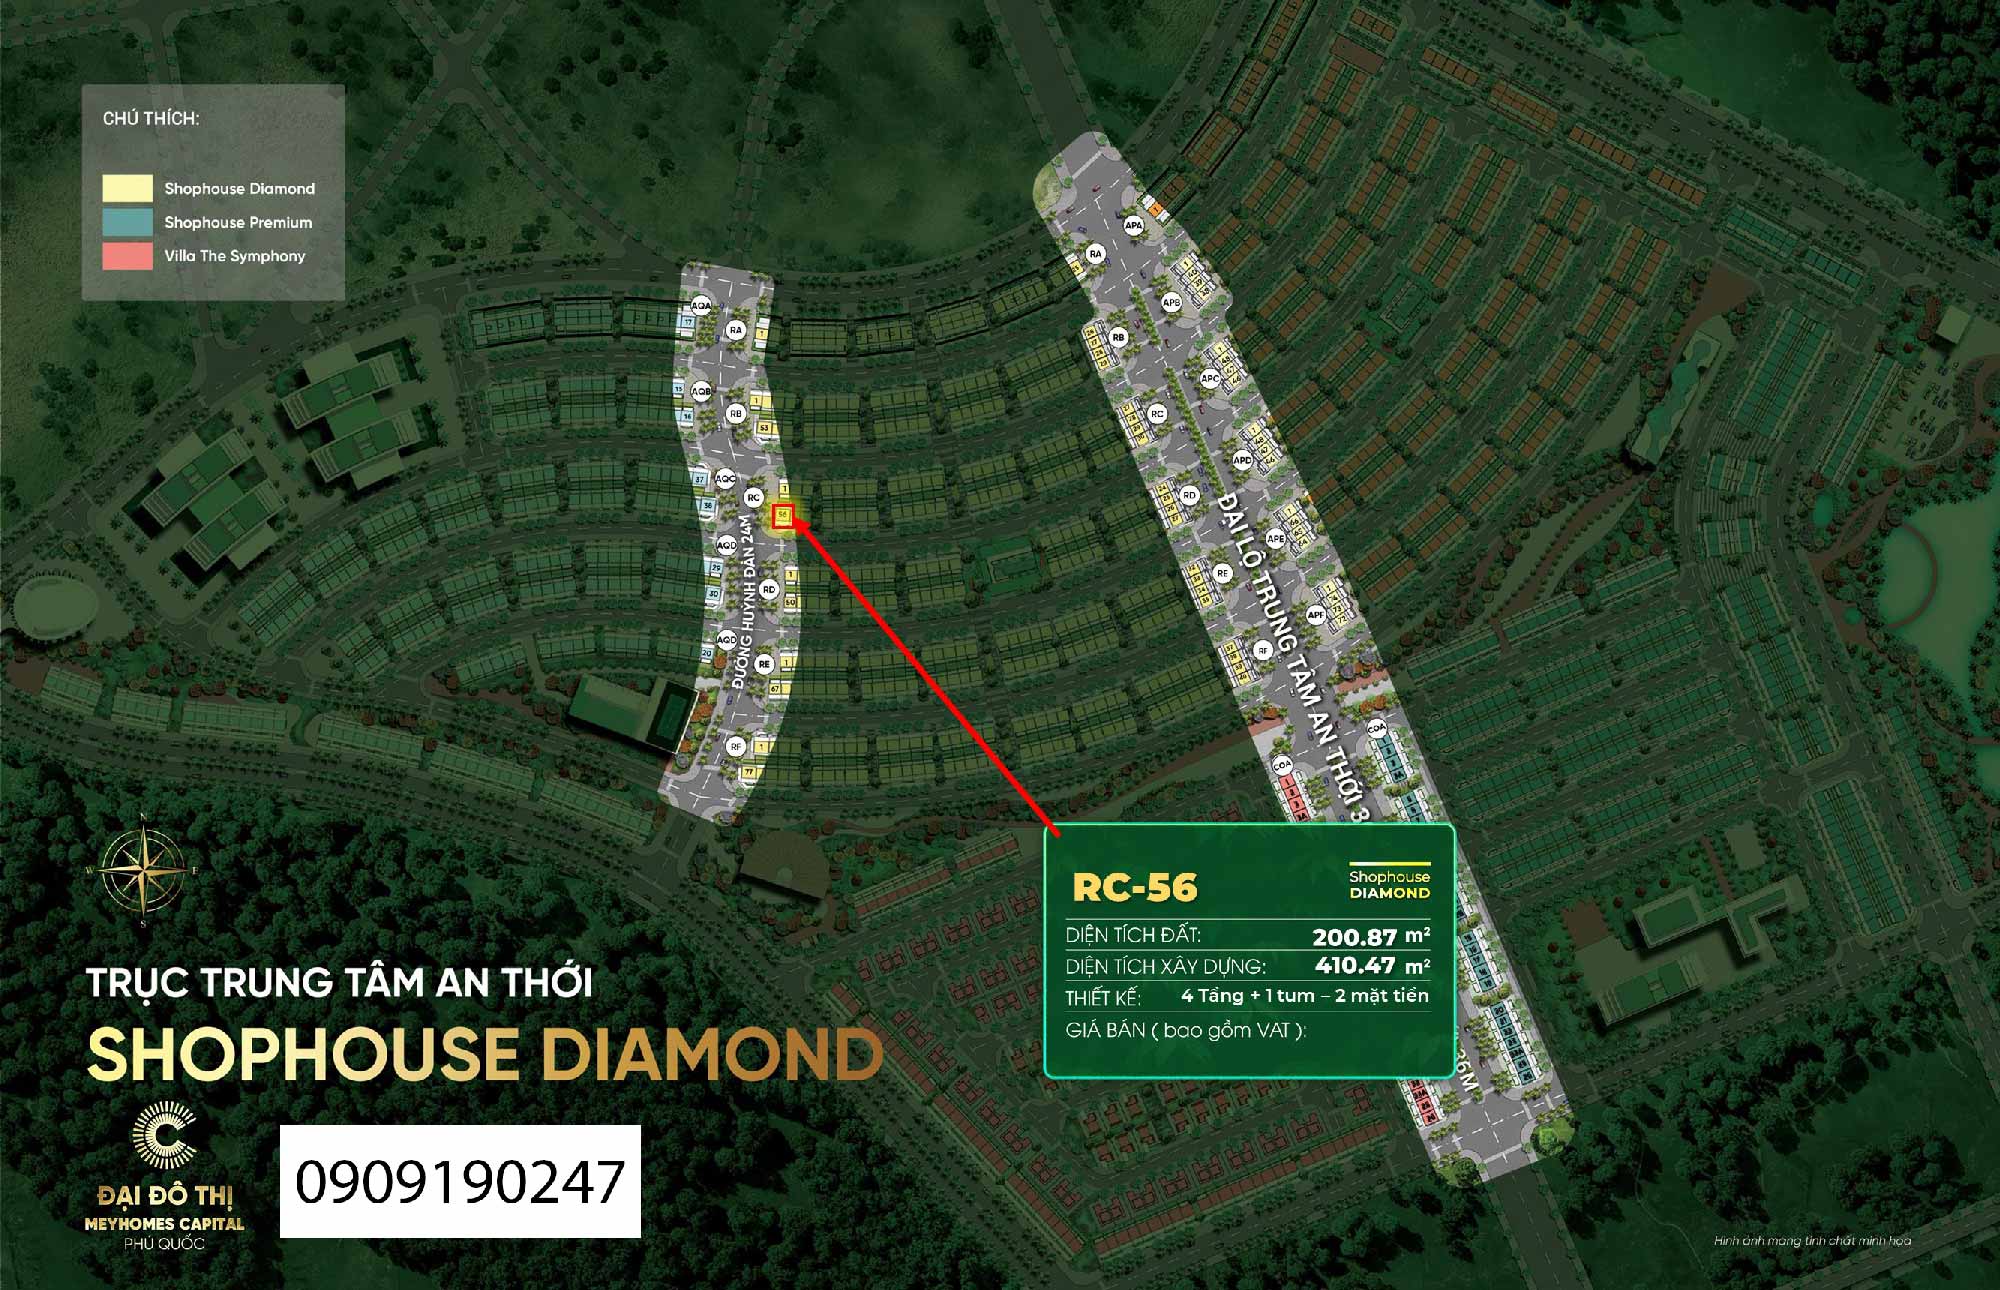 Mặt-bằng-Shophouse-Diamond-Meyhomes-Capital-Phú-Quốc-RC-56